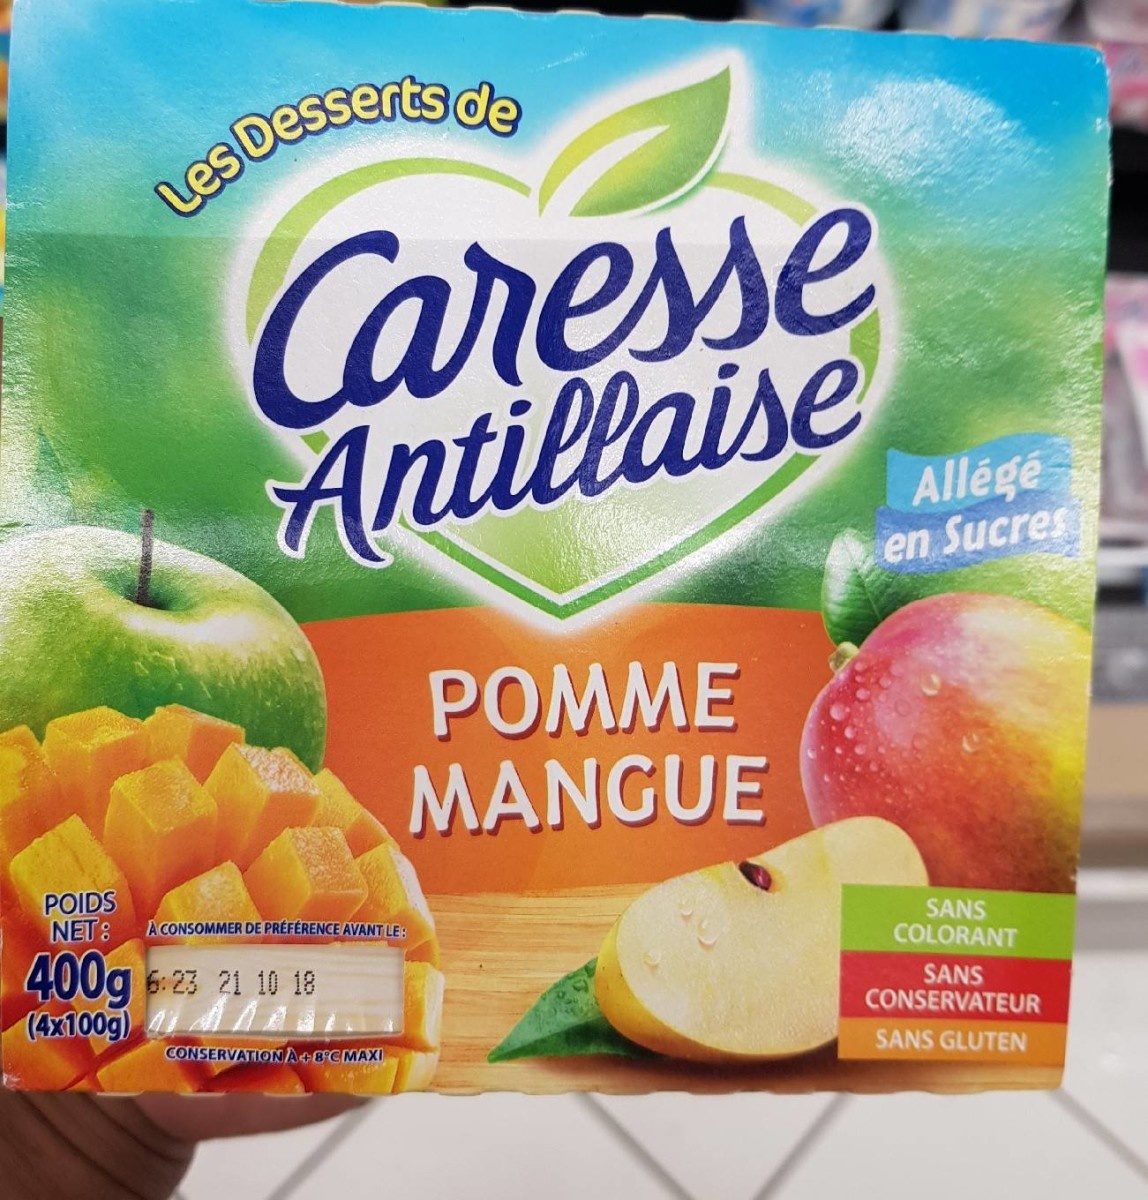 Caresse pomme mangue - Product - fr